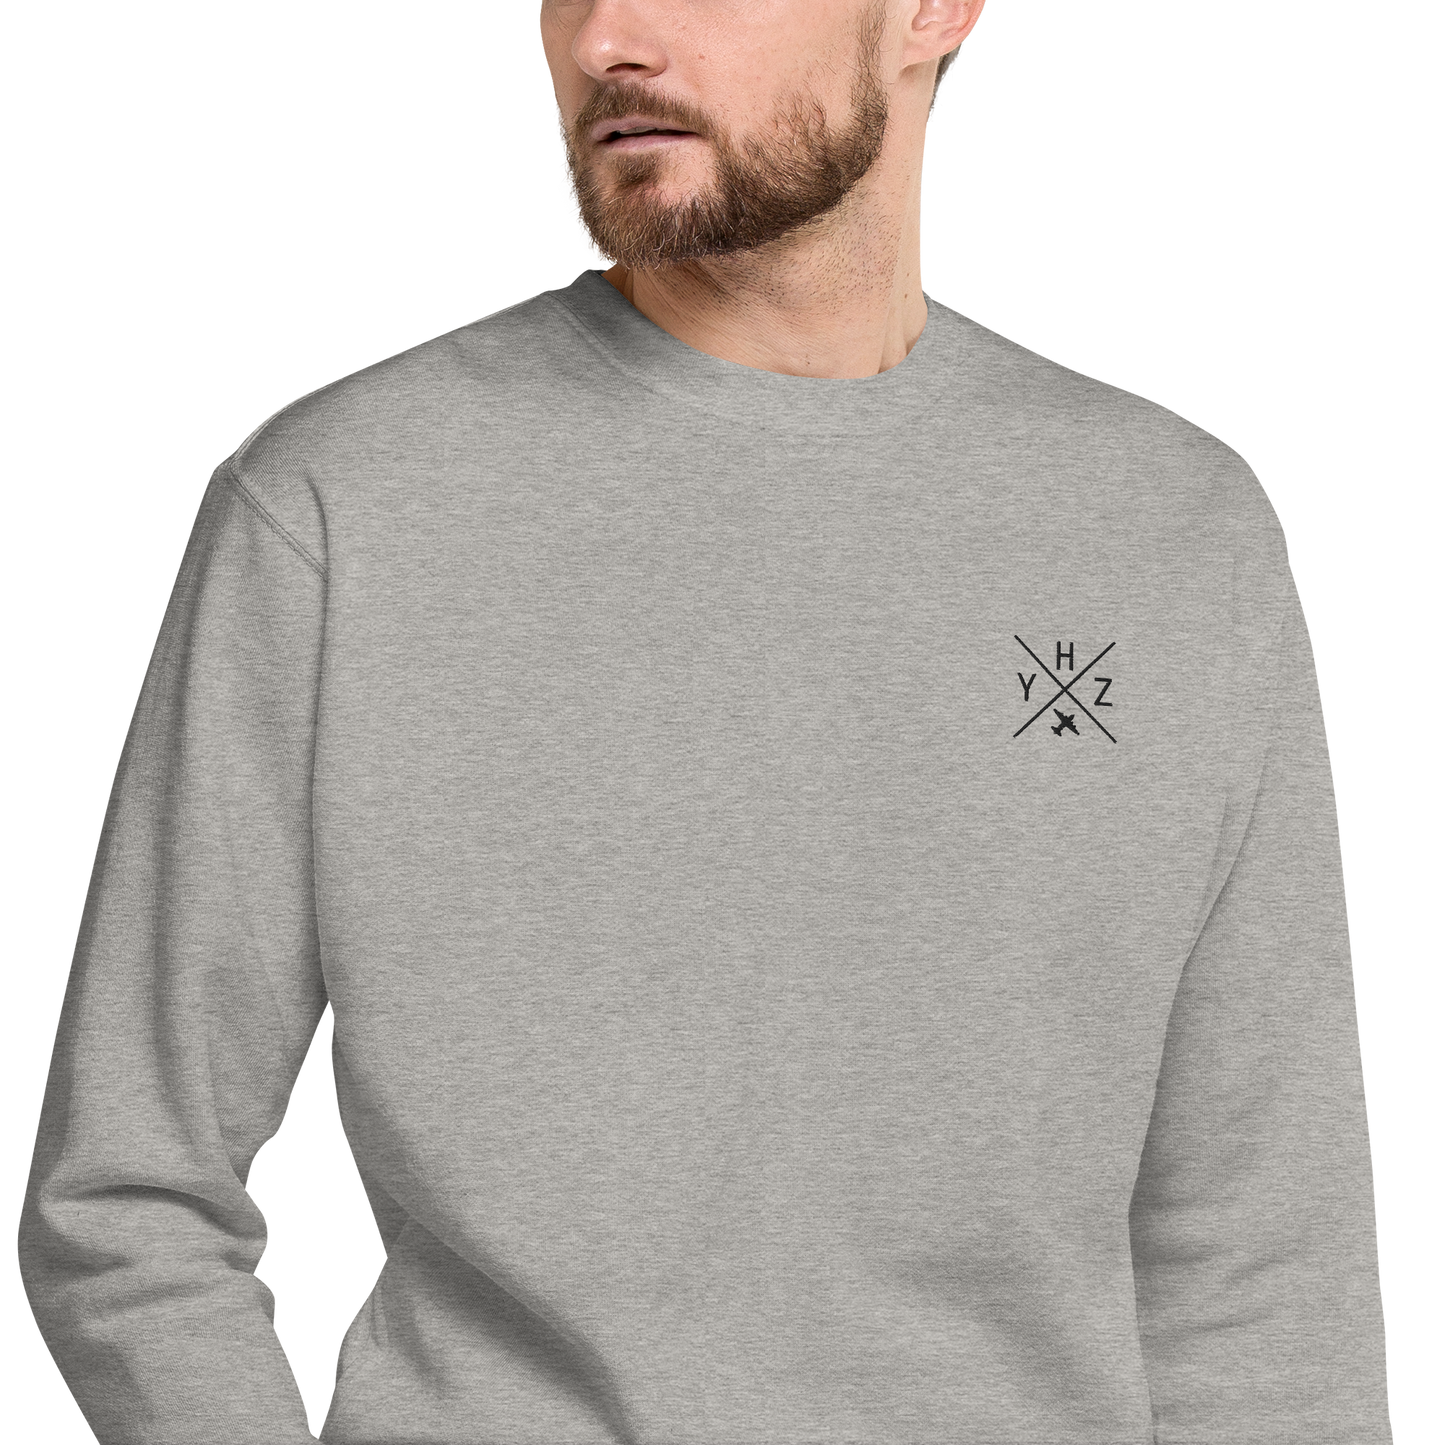 YHM Designs - YHZ Halifax Premium Sweatshirt - Crossed-X Design with Airport Code and Vintage Propliner - Black Embroidery - Image 09